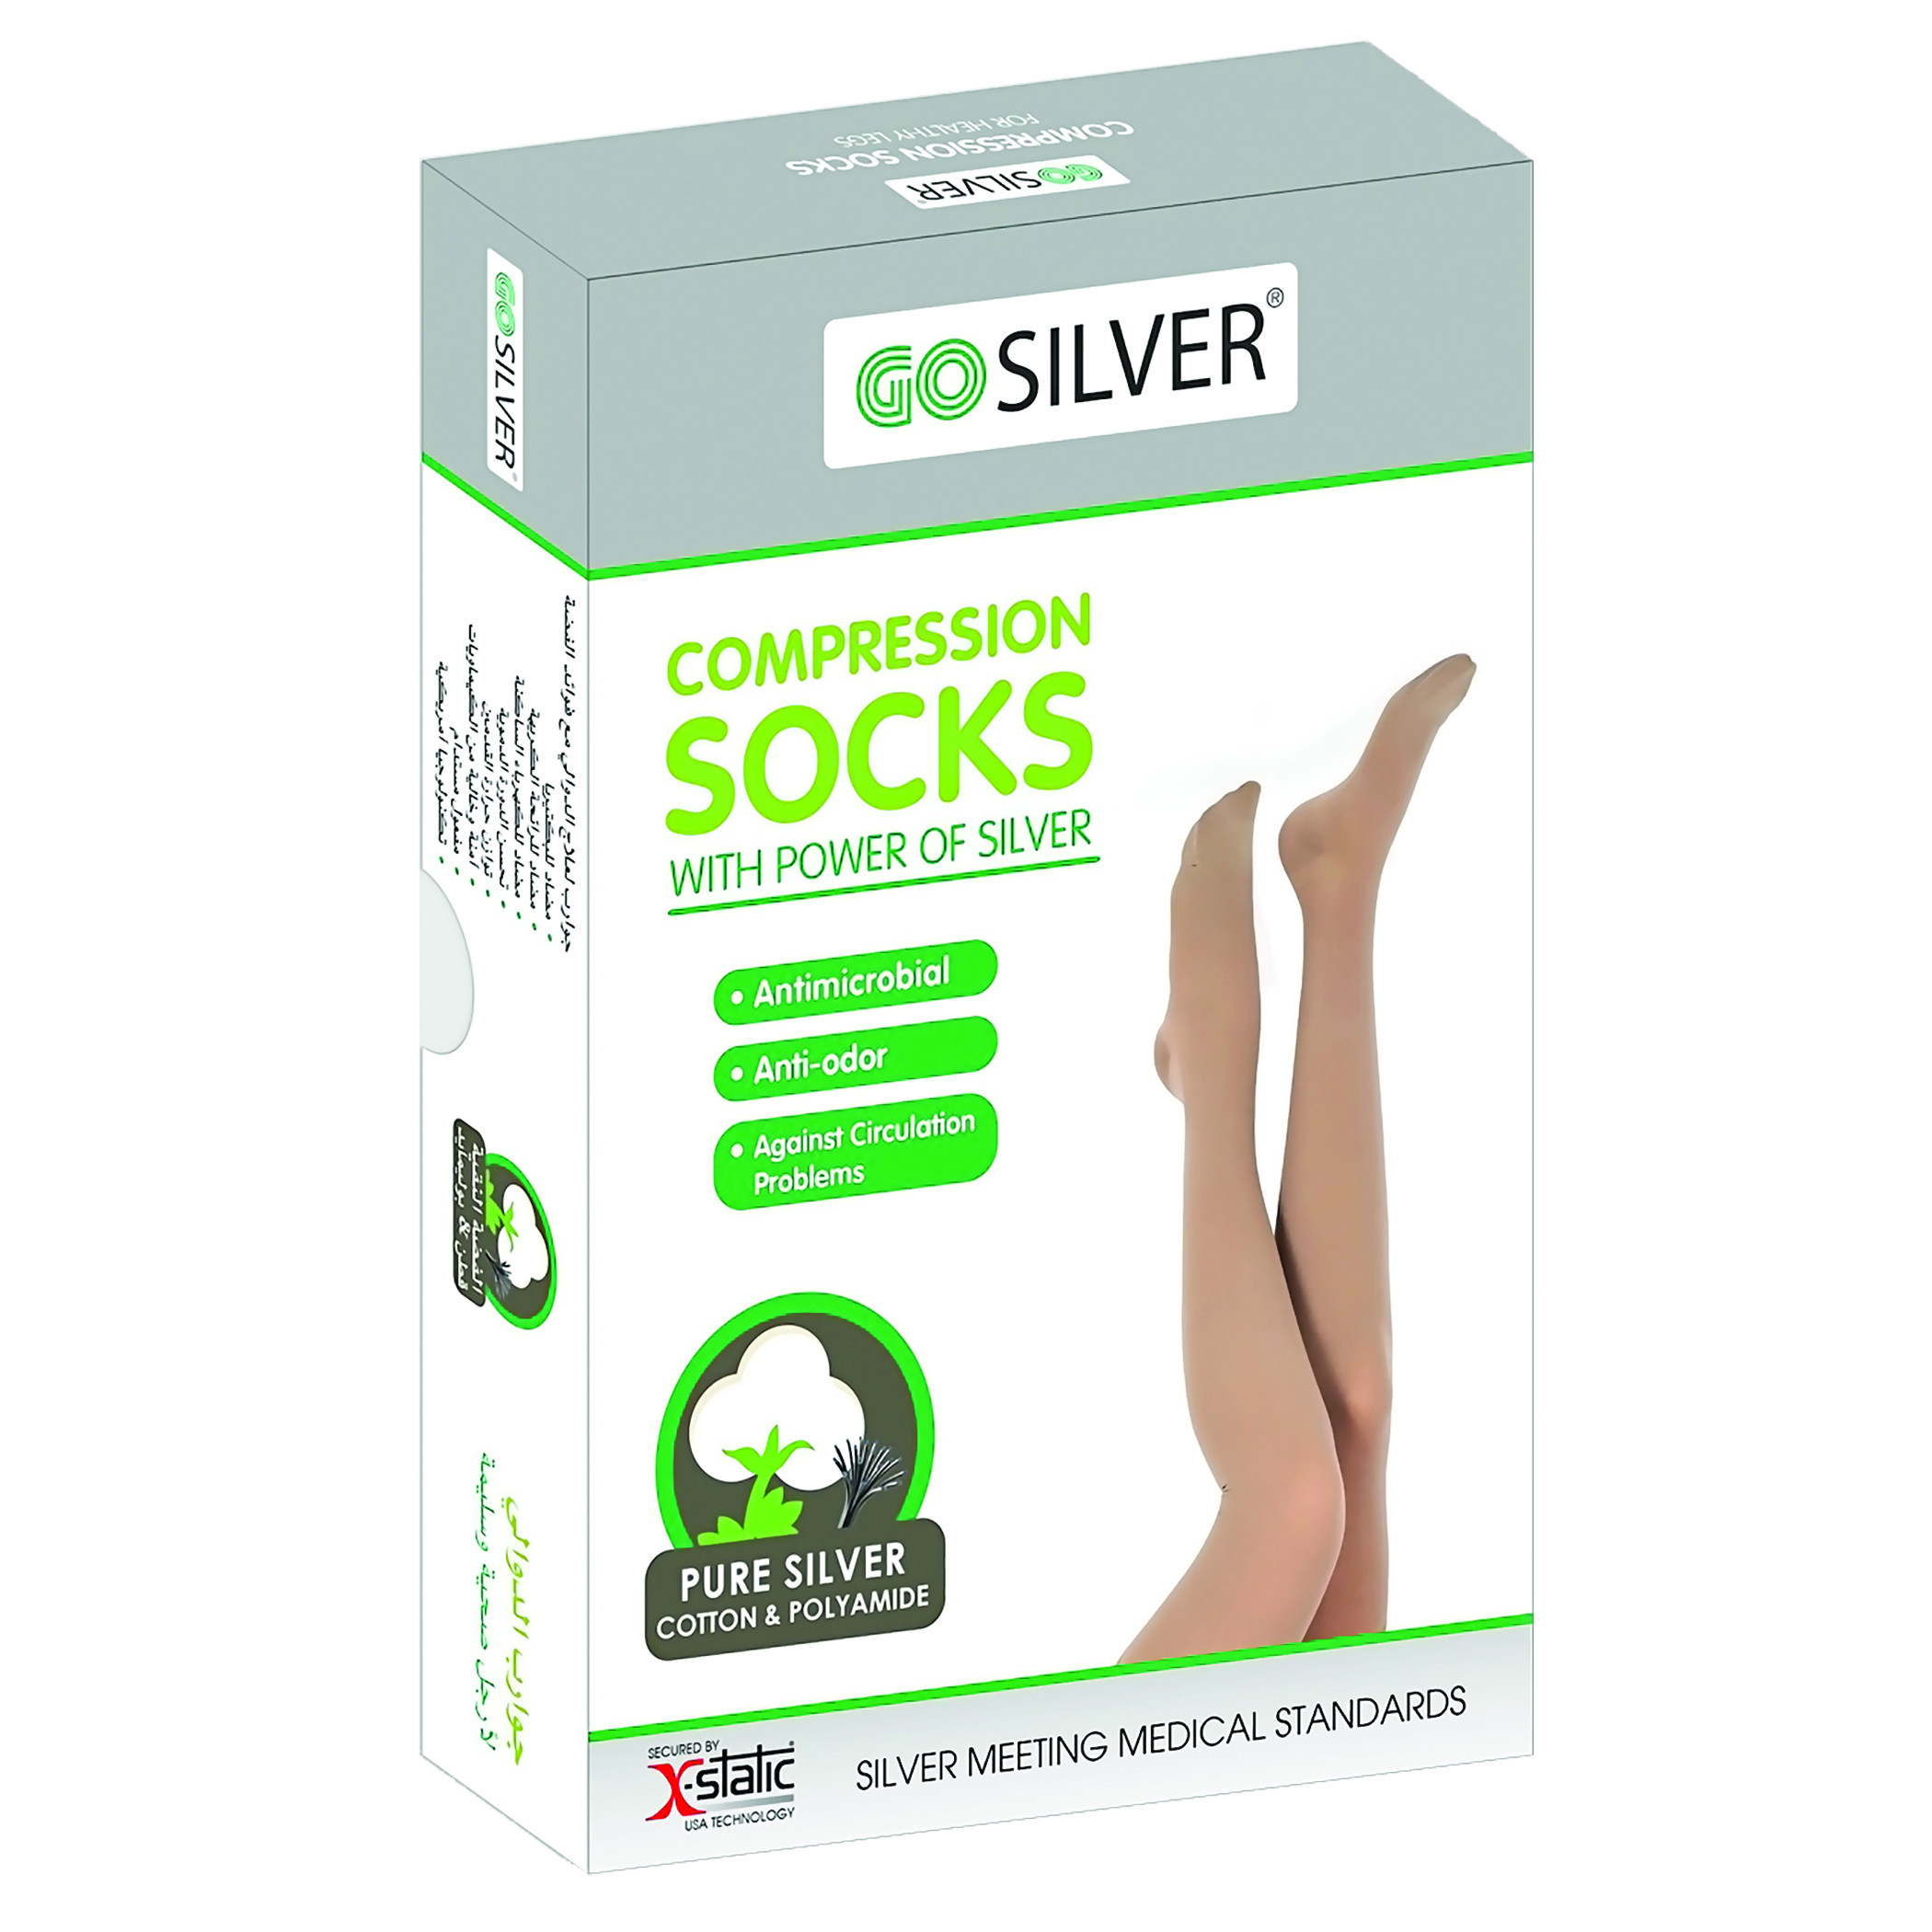 Go Silver Knee High, Compression Socks Class 2  (23-32 mmHG) Closed Toe Flesh  Size 5